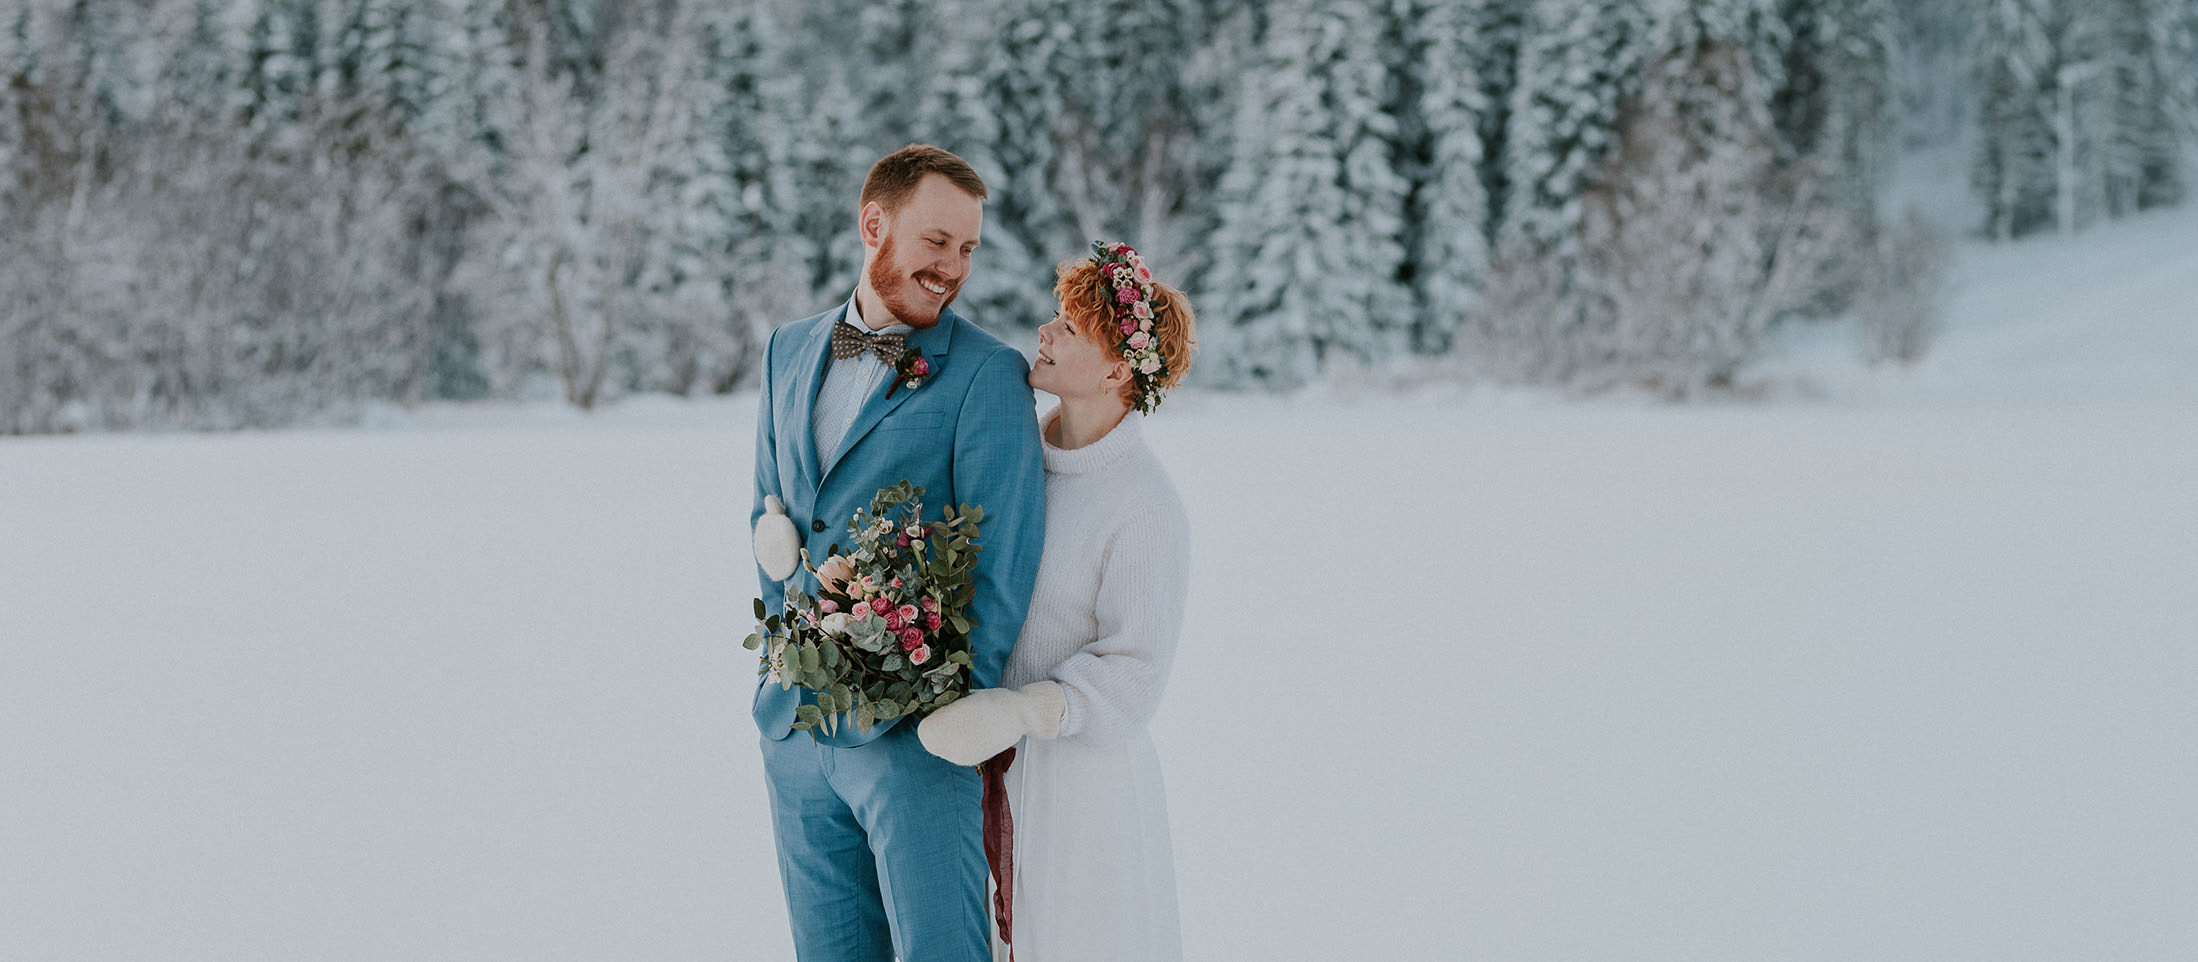 Nordic winter elopement in Norway - eloping in winter time